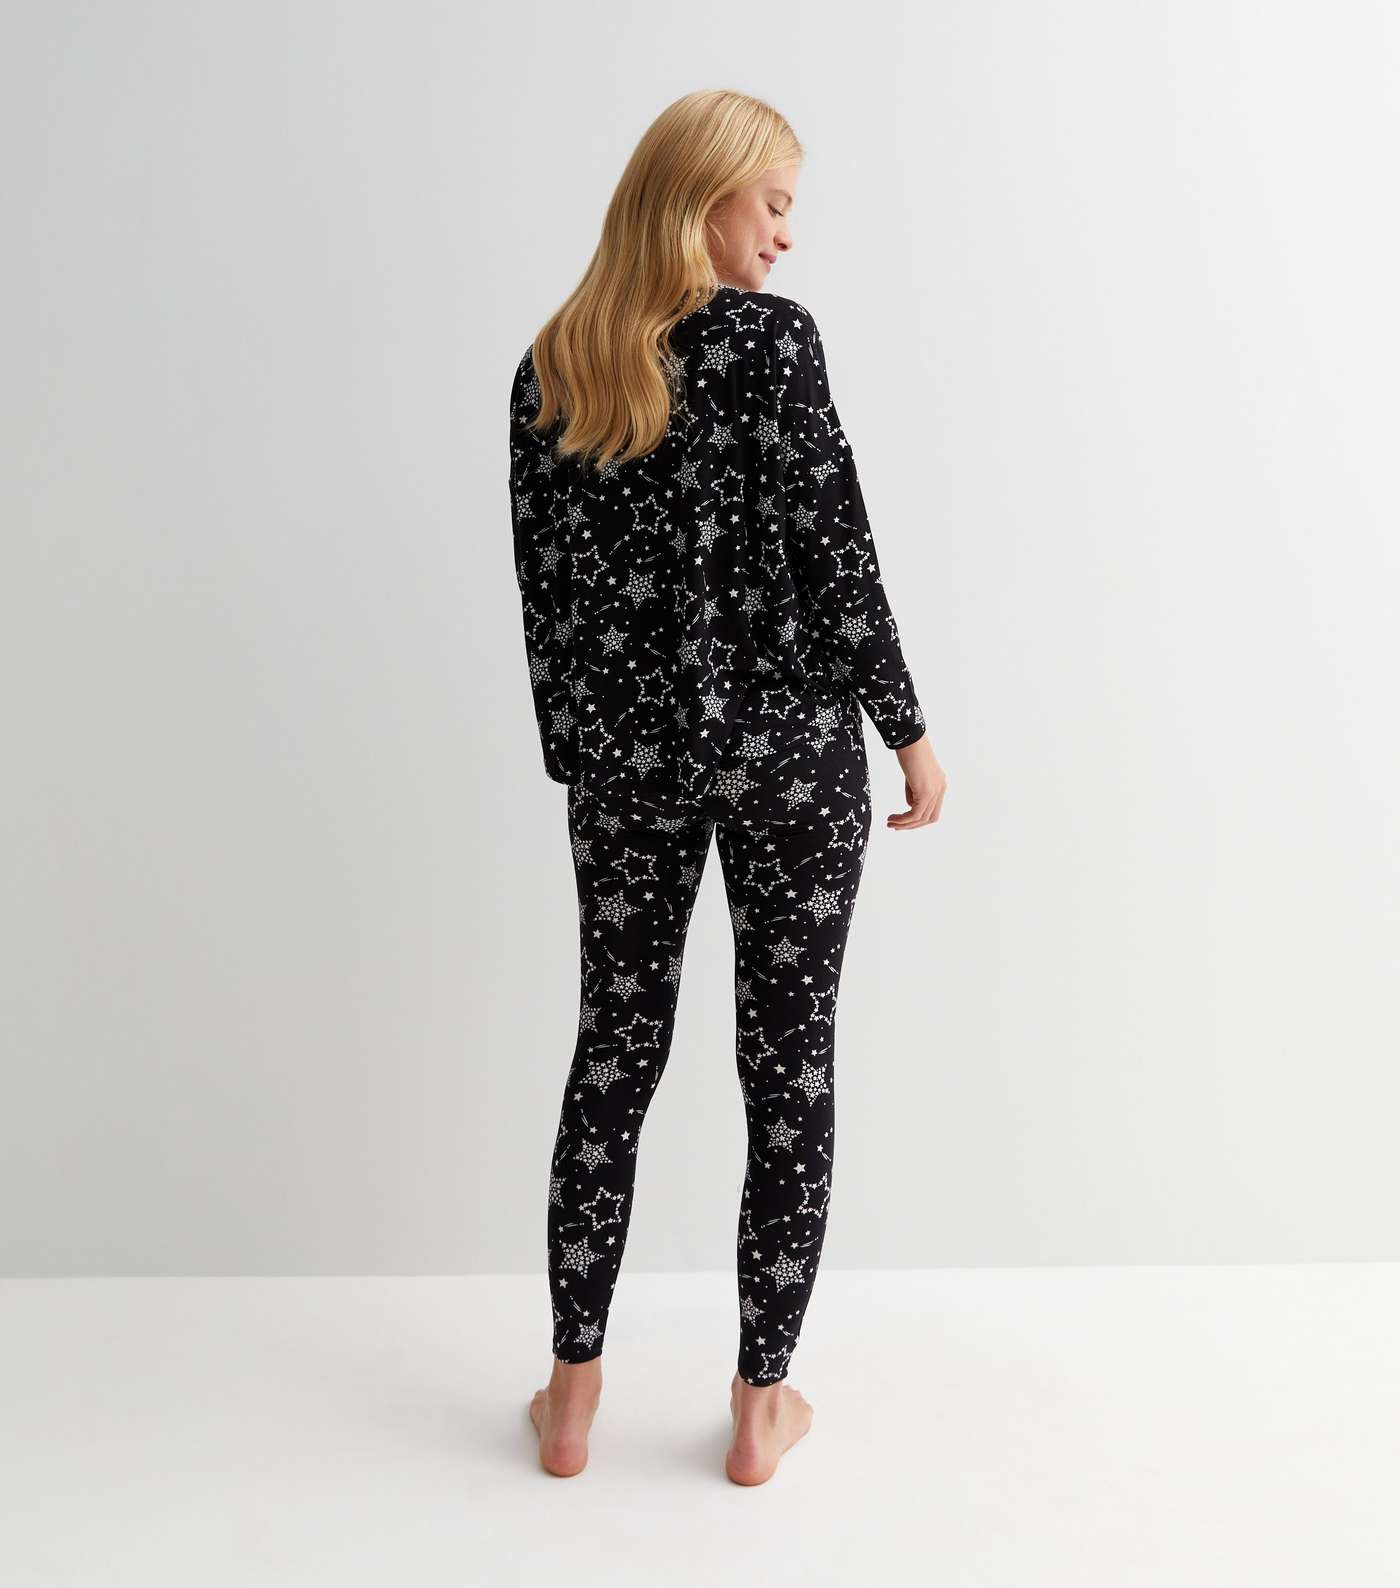 Black Soft Touch Legging Pyjama Set with Star Print Image 4